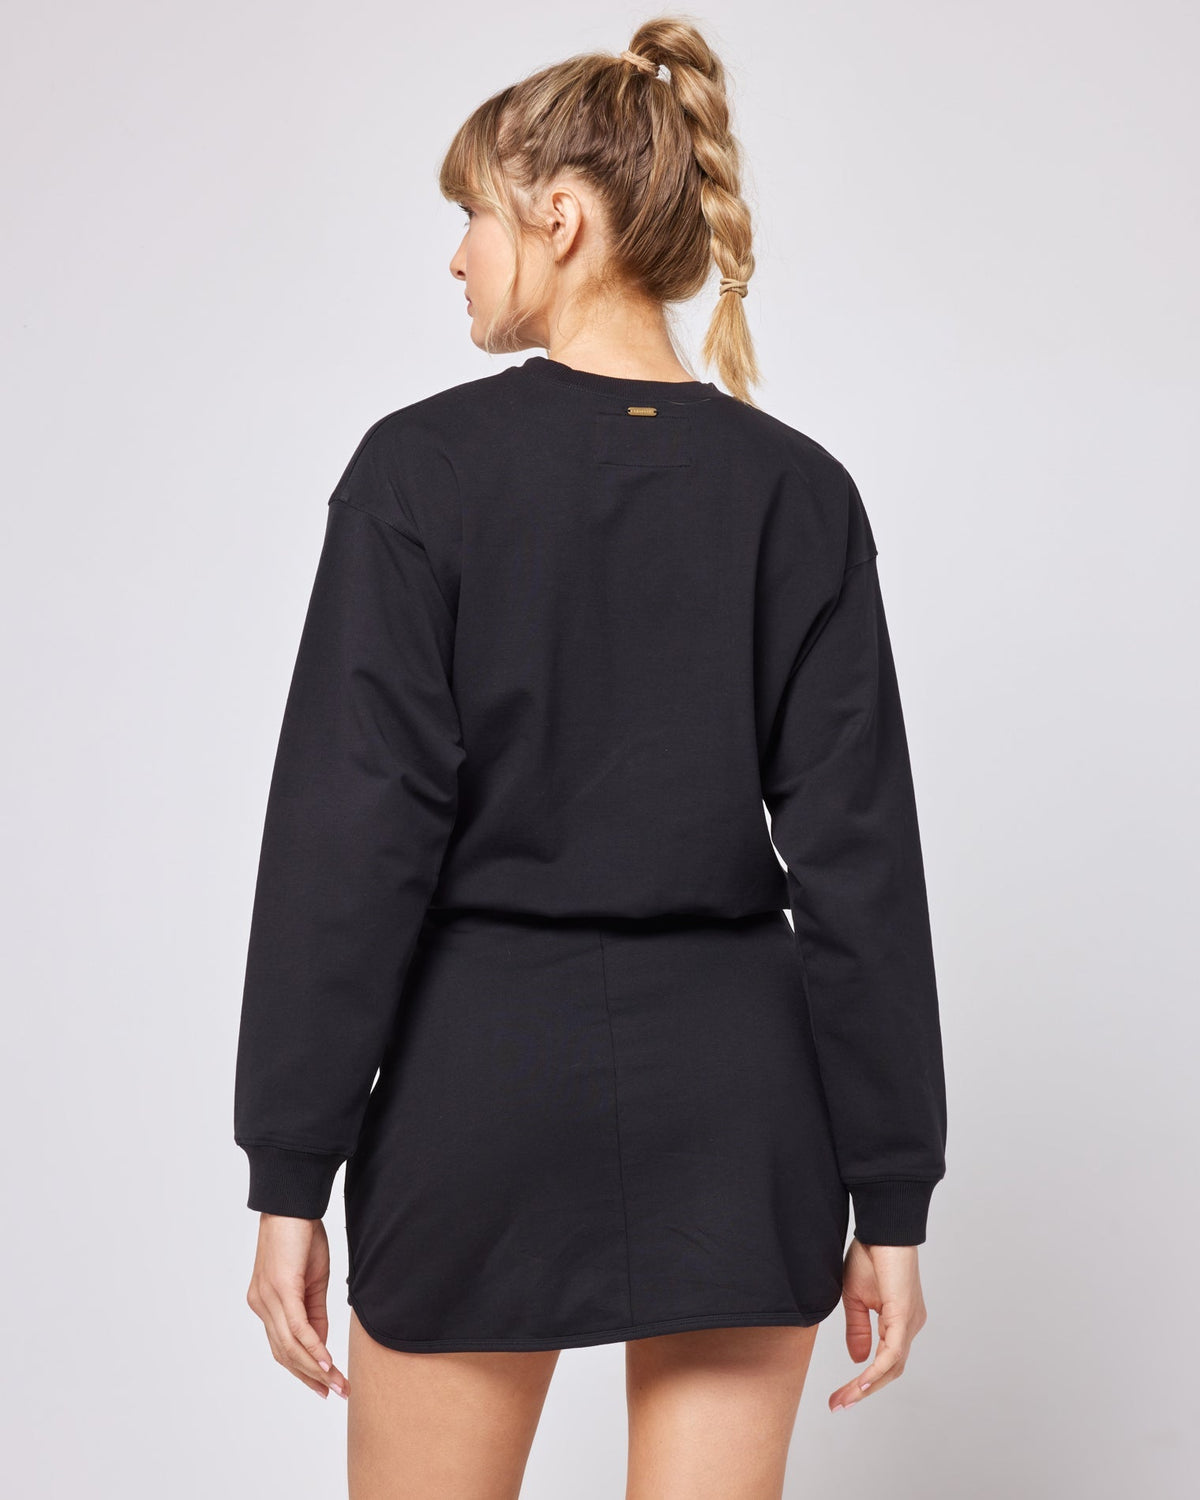 Groove Dress - Black Black | Model: Lura (size: S)